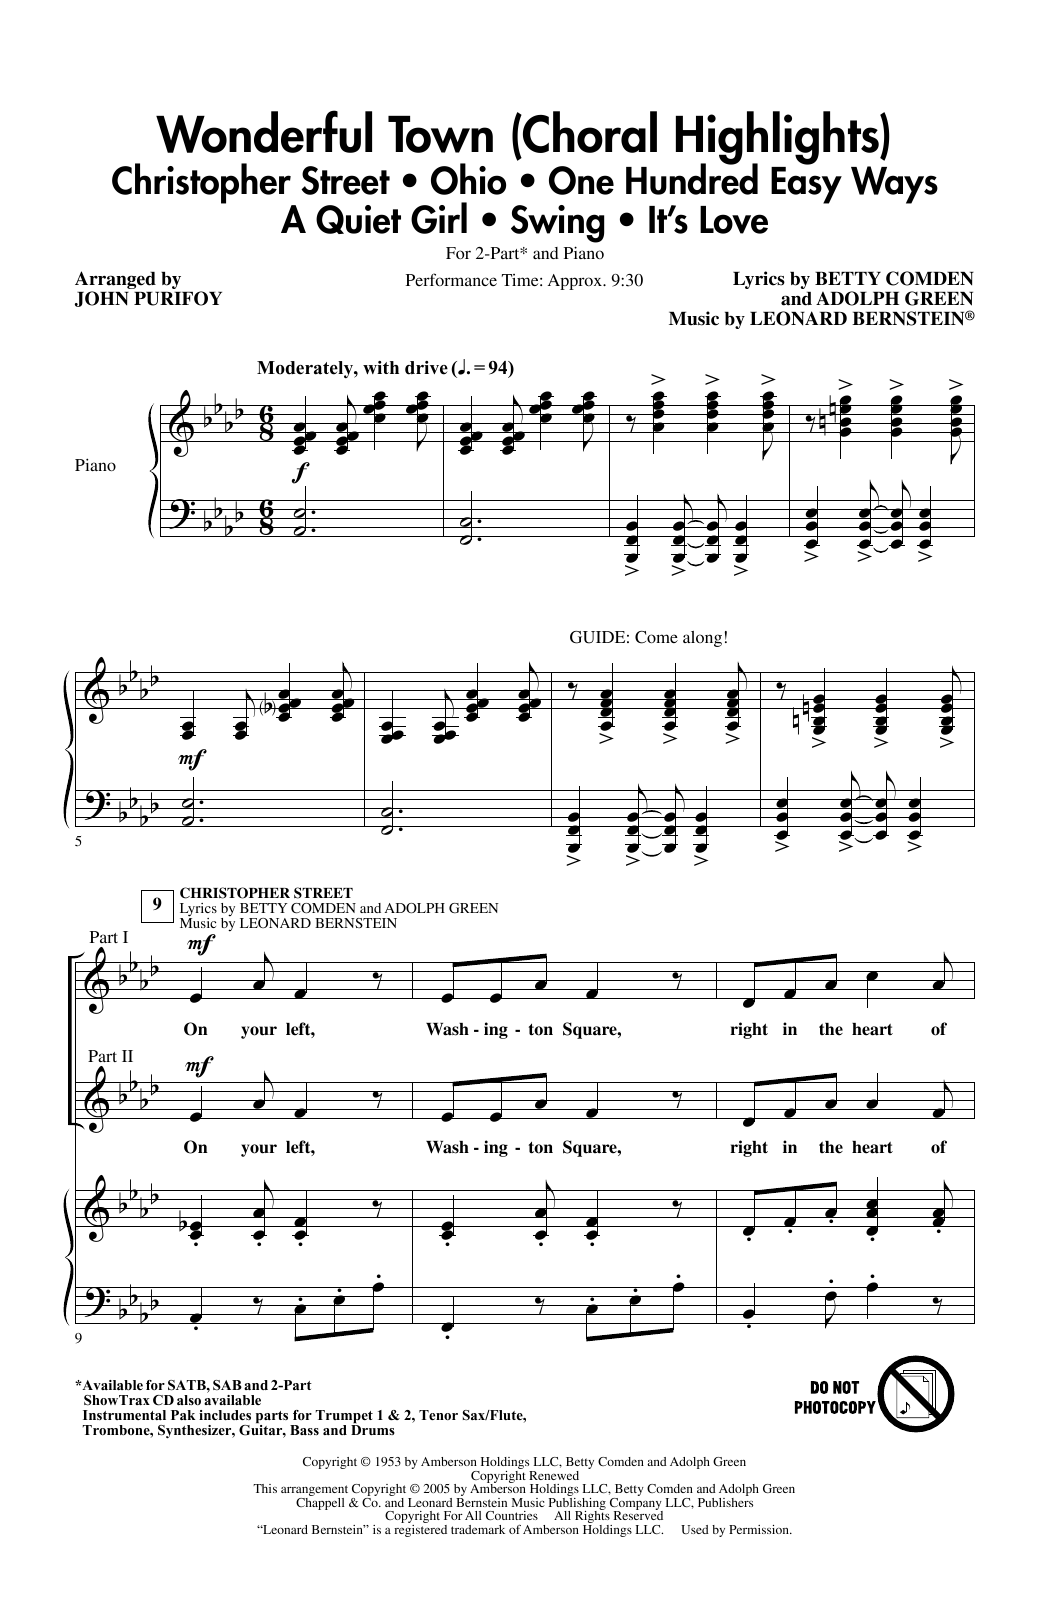 Leonard Bernstein Wonderful Town (Choral Highlights) (arr. John Purifoy) Sheet Music Notes & Chords for 2-Part Choir - Download or Print PDF